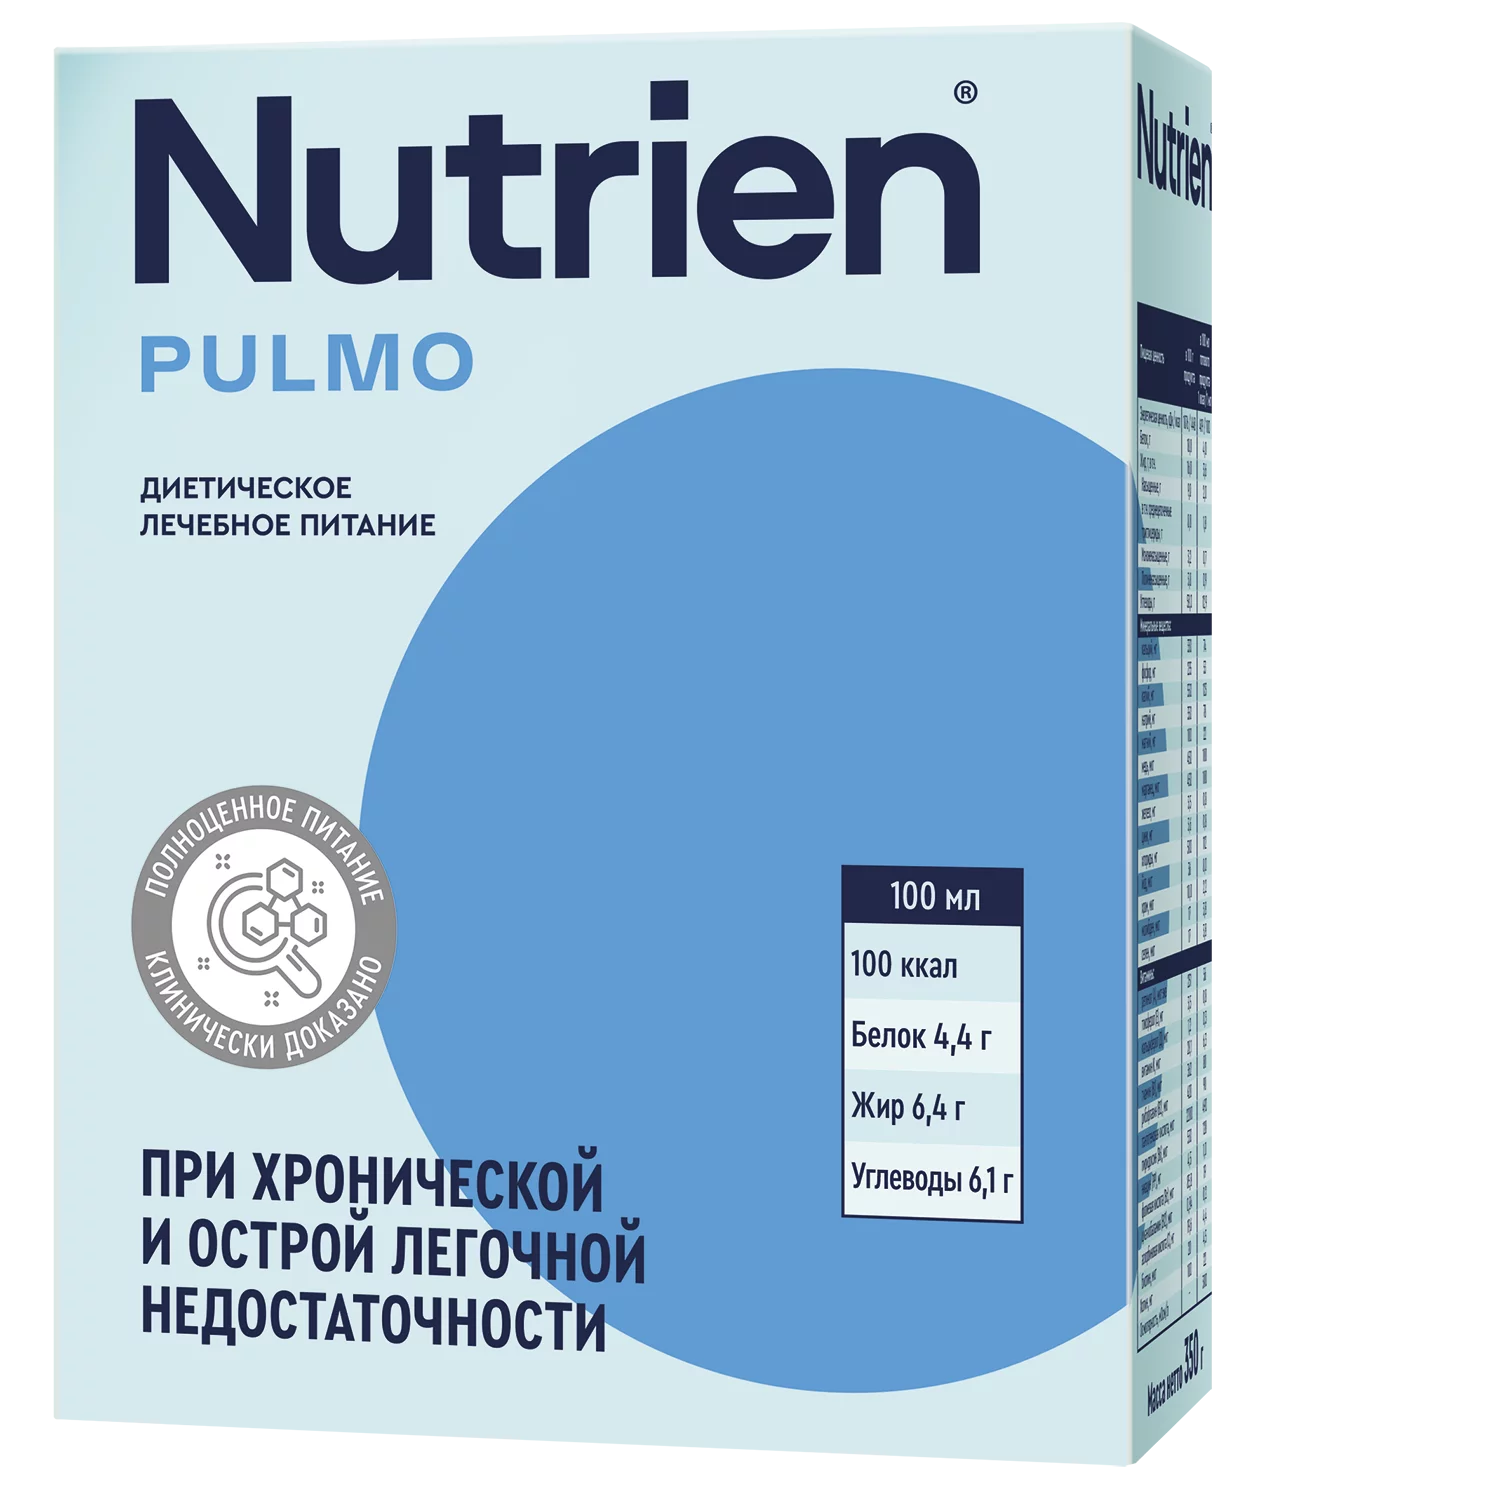 Nutrien Pulmo - 1